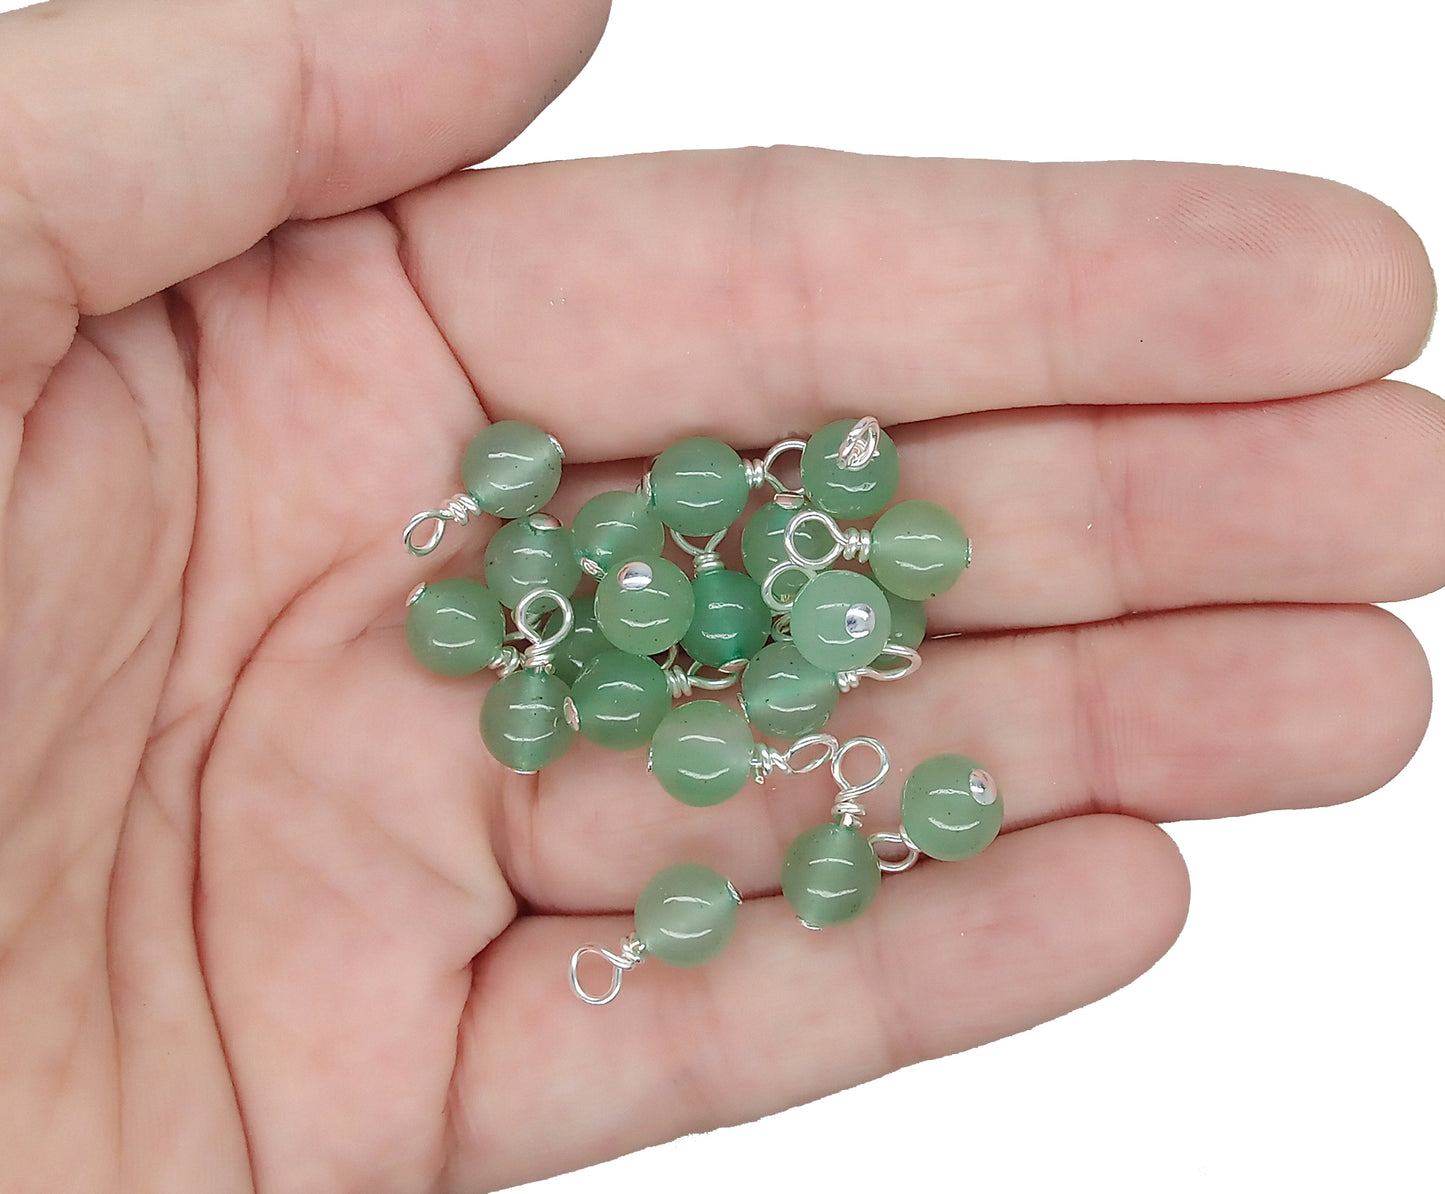 Green Aventurine 6mm Bead Charms, Gemstone Dangles - Adorabilities Charms & Trinkets